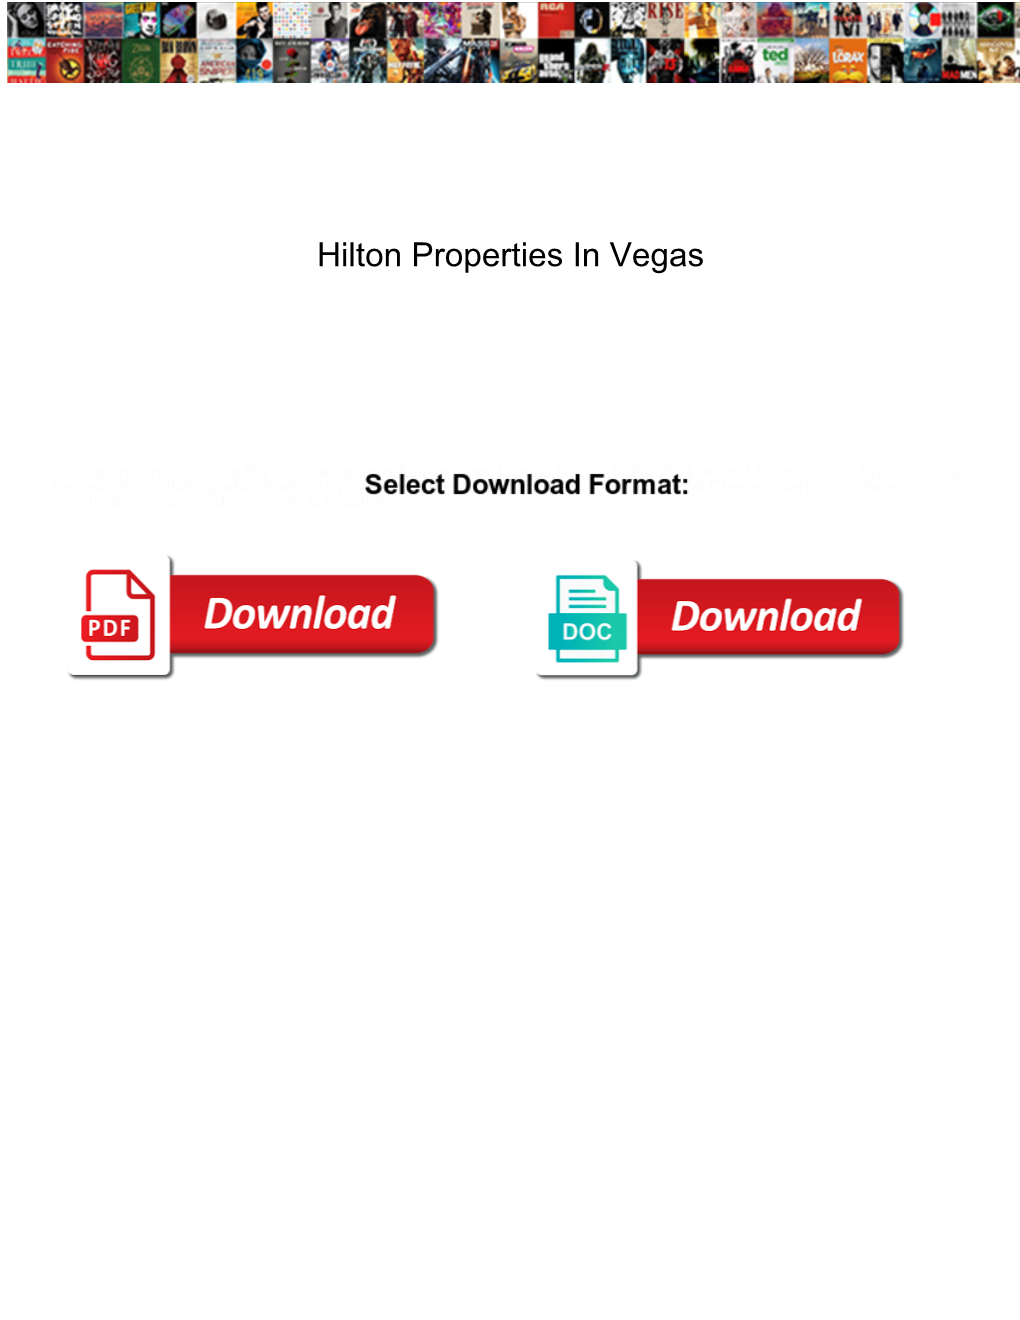 Hilton Properties in Vegas